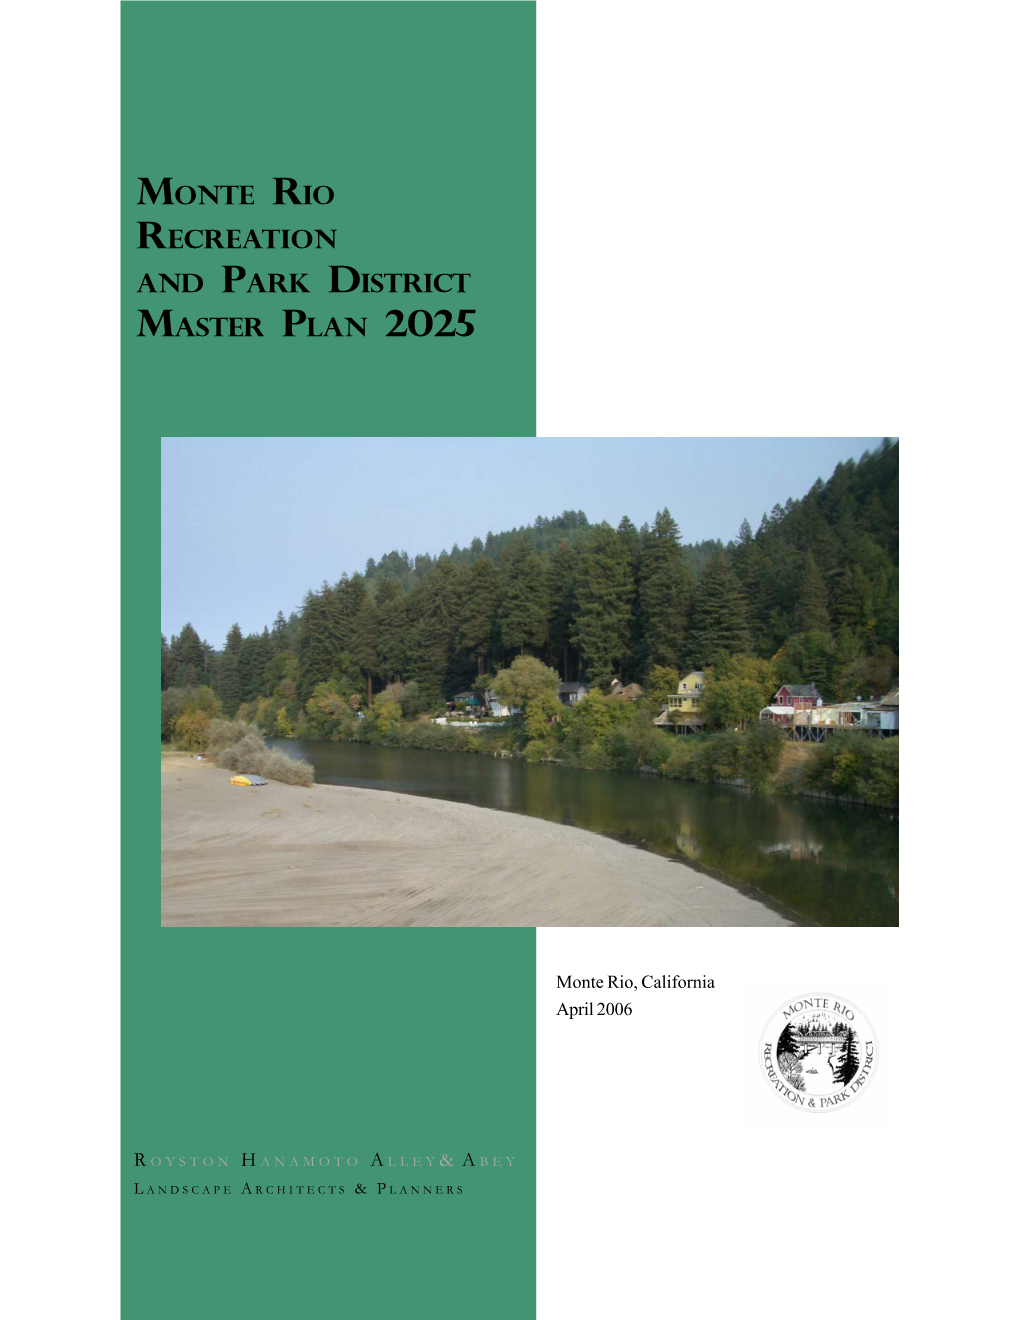 Monte Rio Recreation and Park District Master Plan 2025